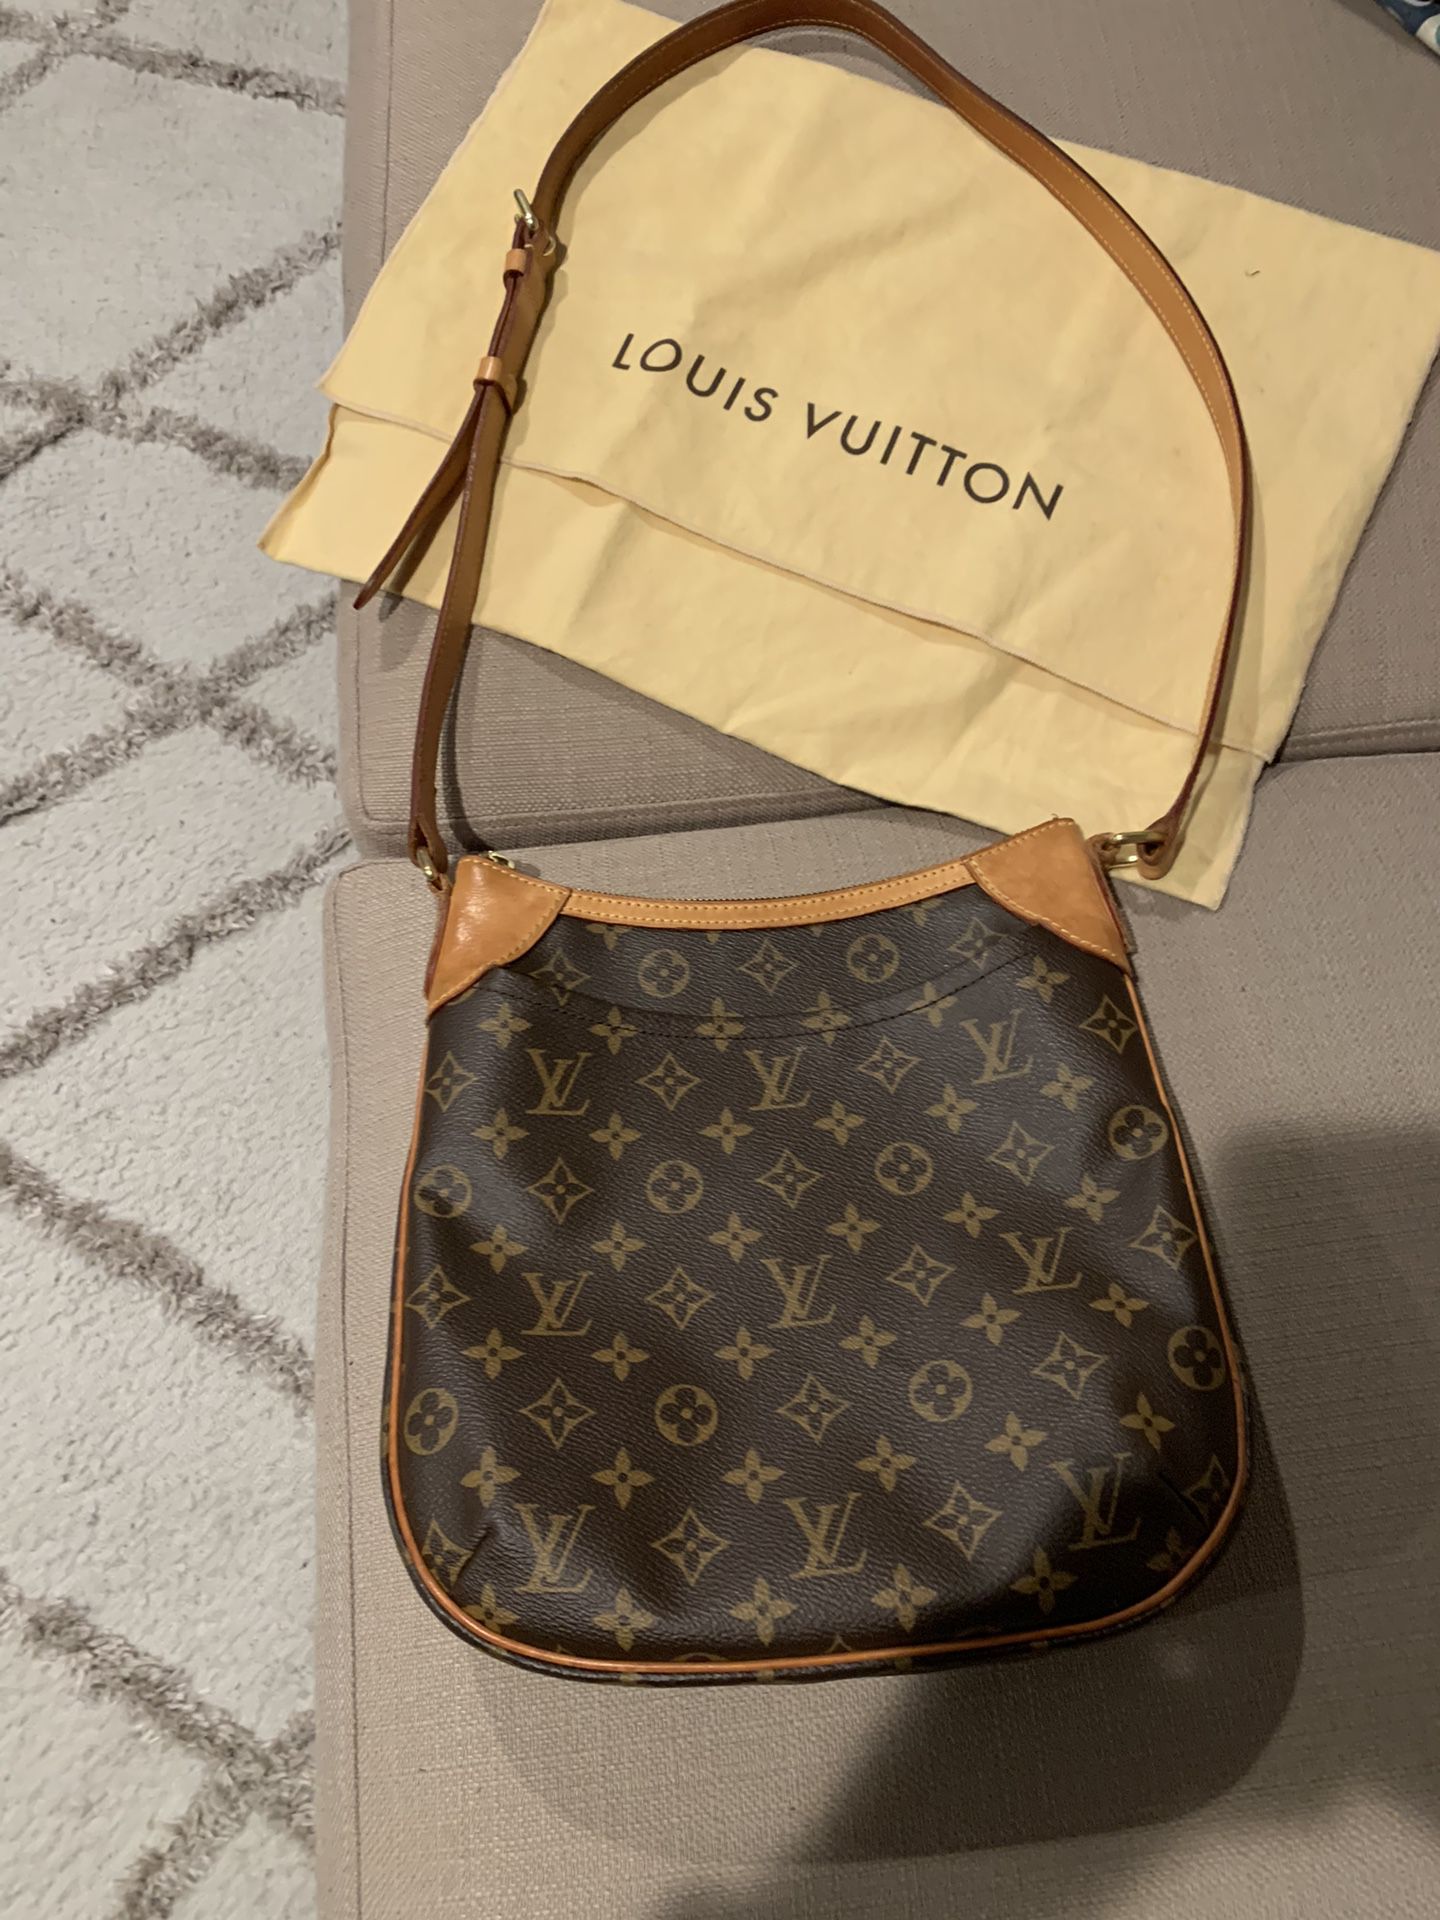 Beautiful Louis Vuitton Crossbody Purse